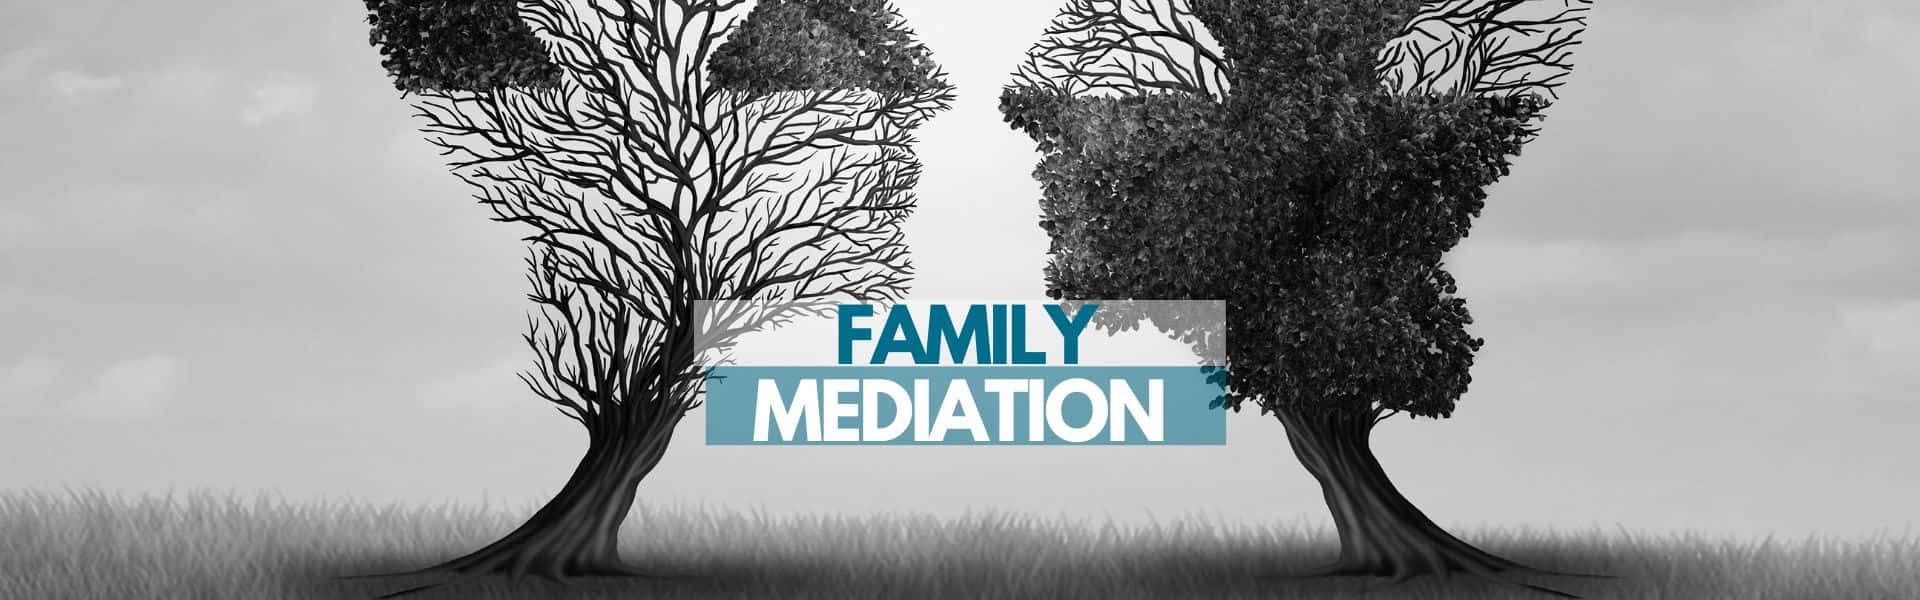 Family Mediation Lawyer Sydney